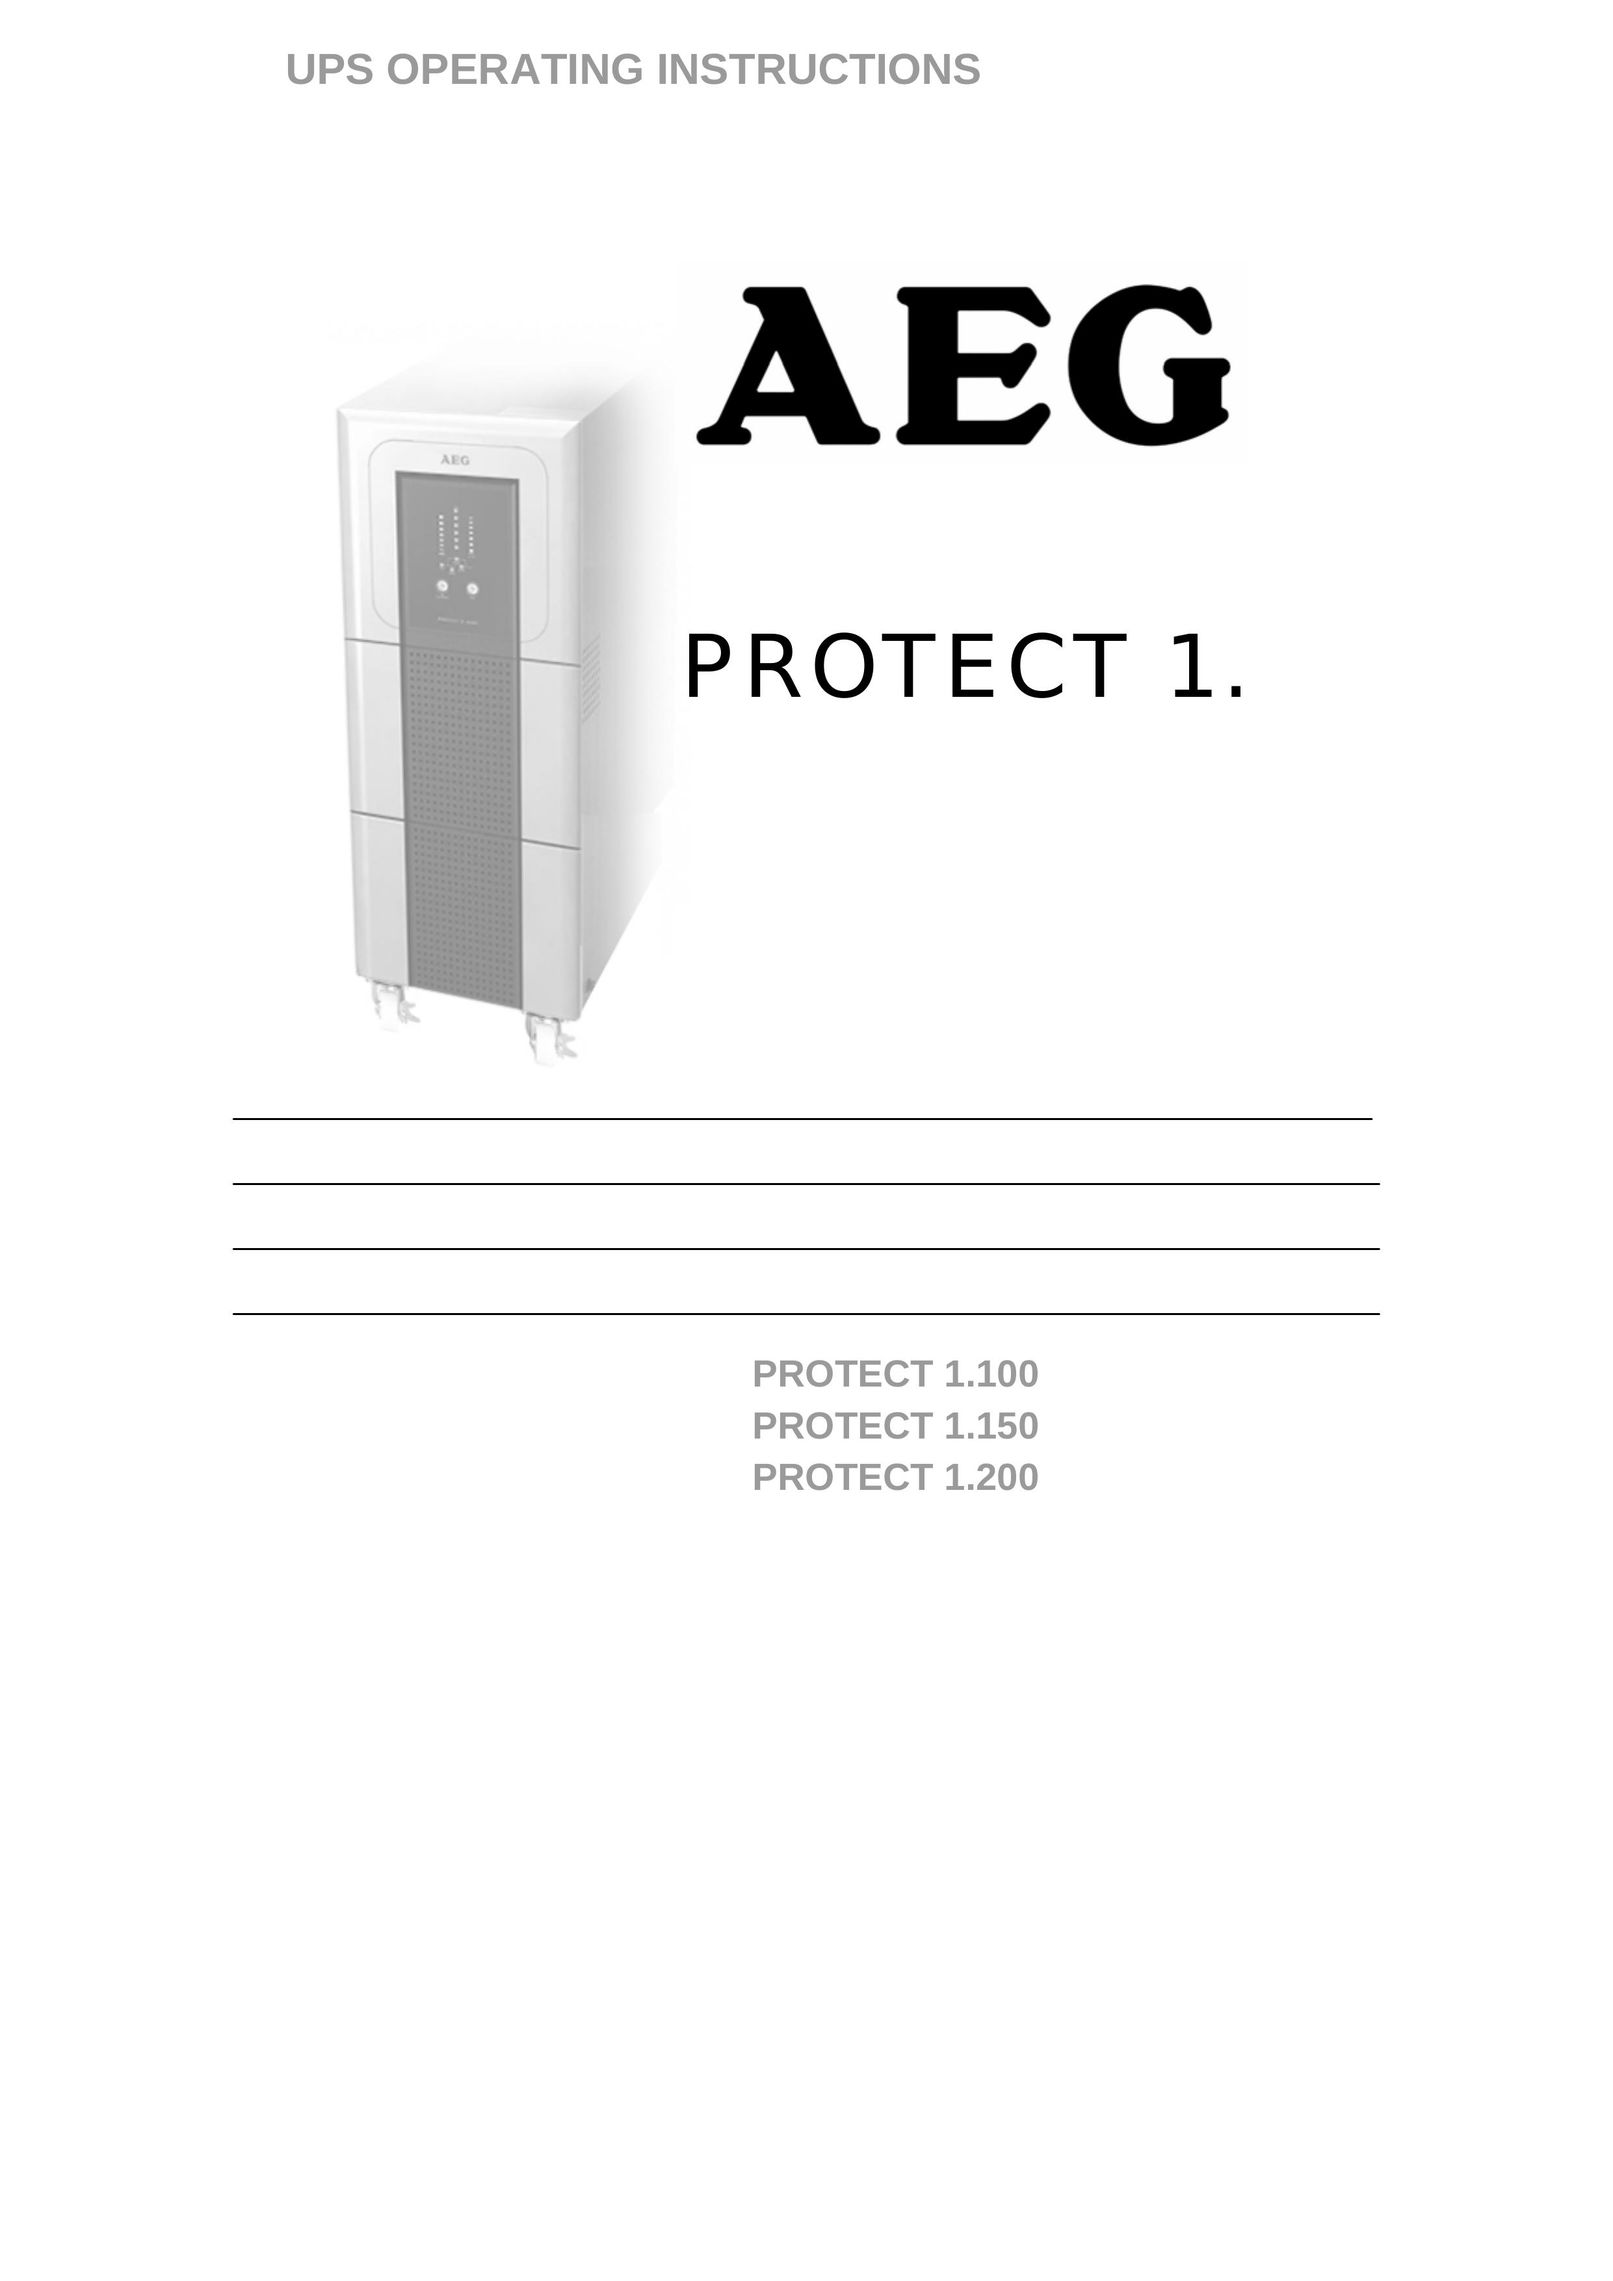 AEG PROTECT 1.150 Power Supply User Manual